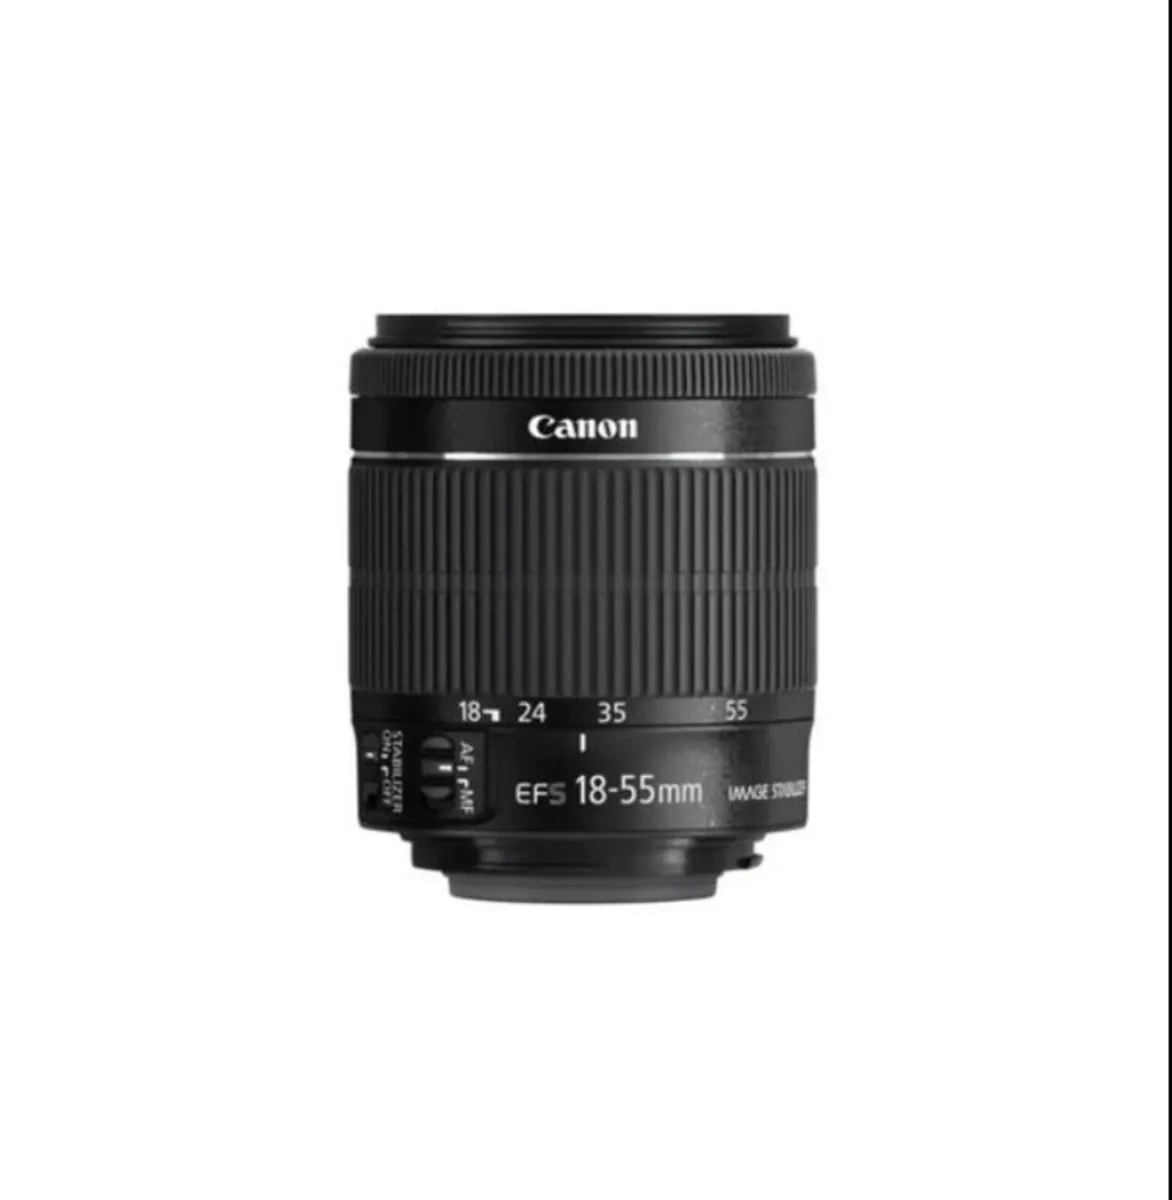 Brand new Canon Ef-s 18-55mm lens